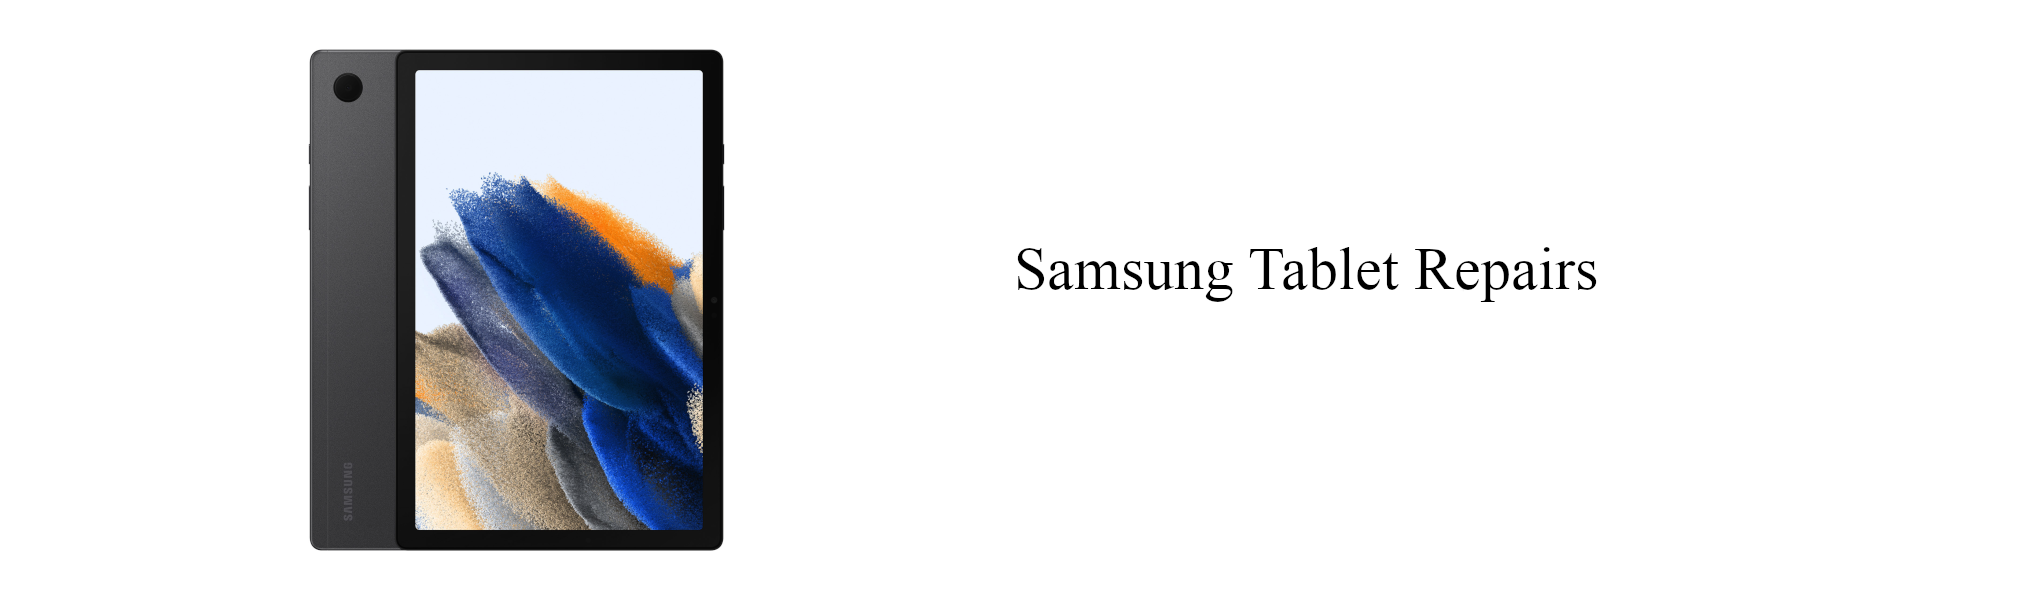 Samsung Tablet Repairs.png